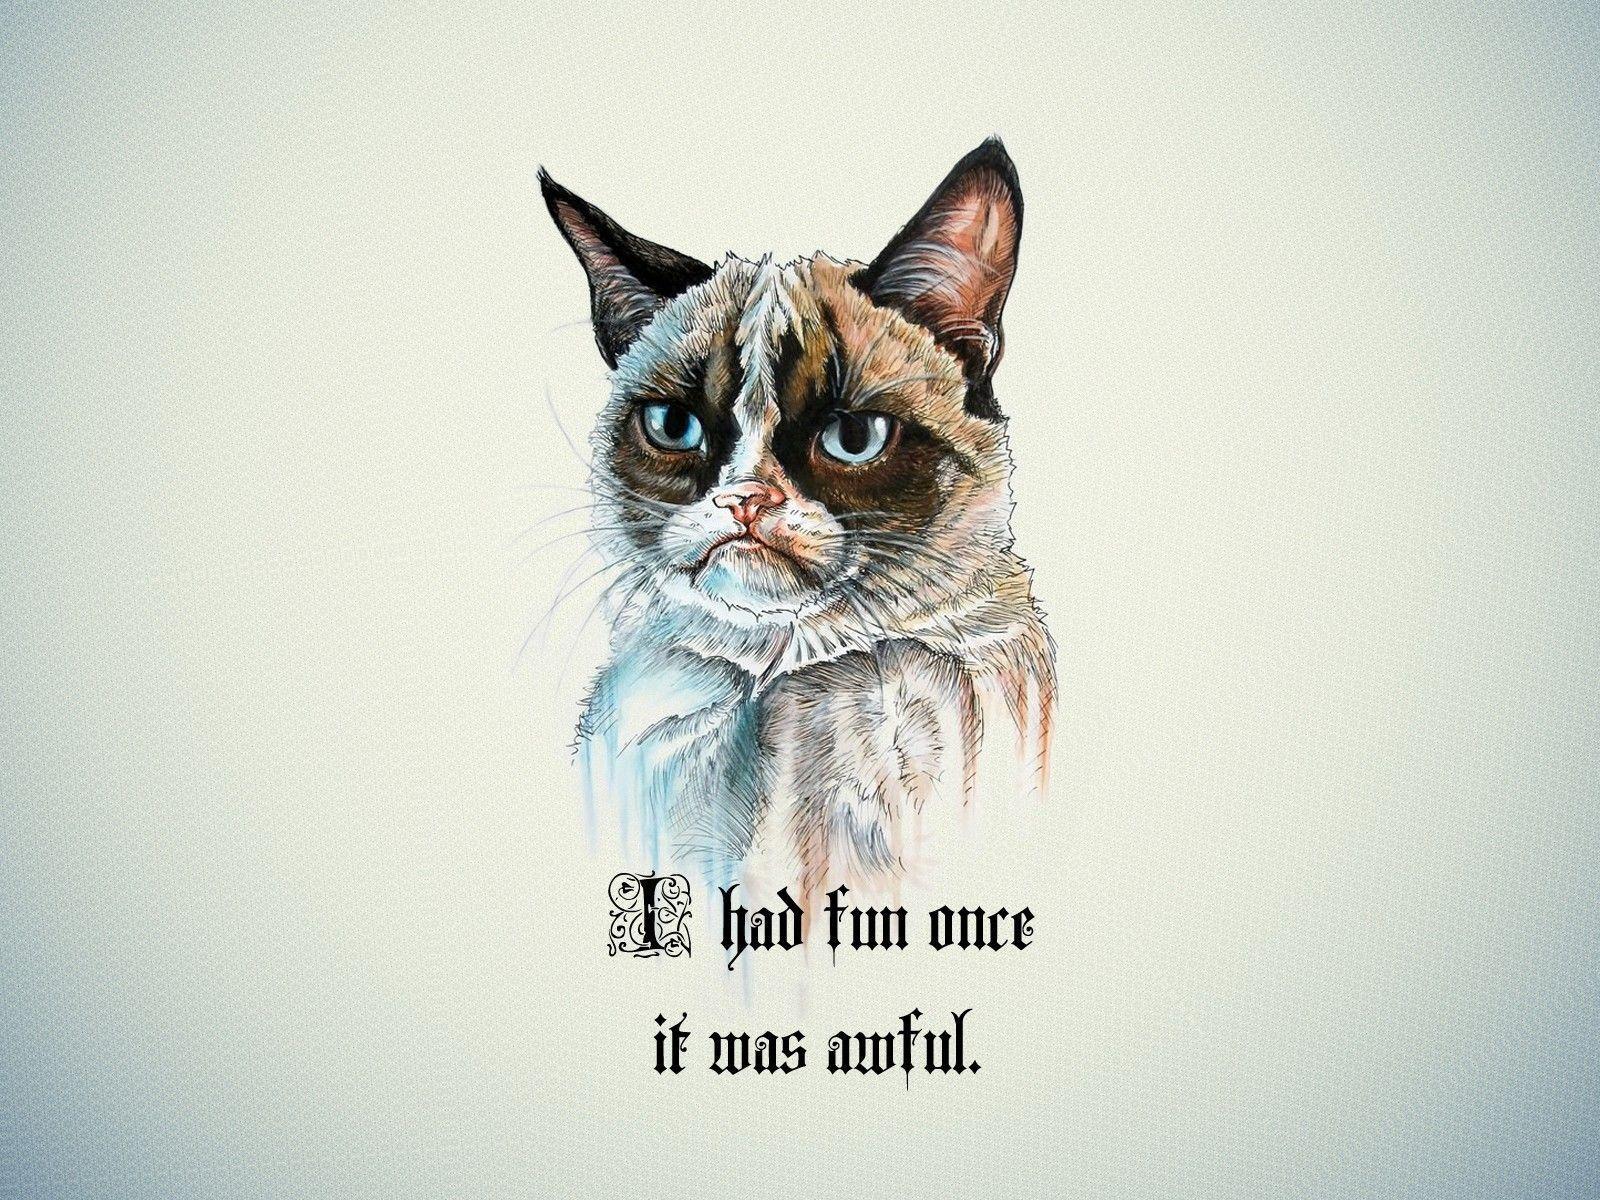 Cat Meme Pictures  Download Free Images on Unsplash